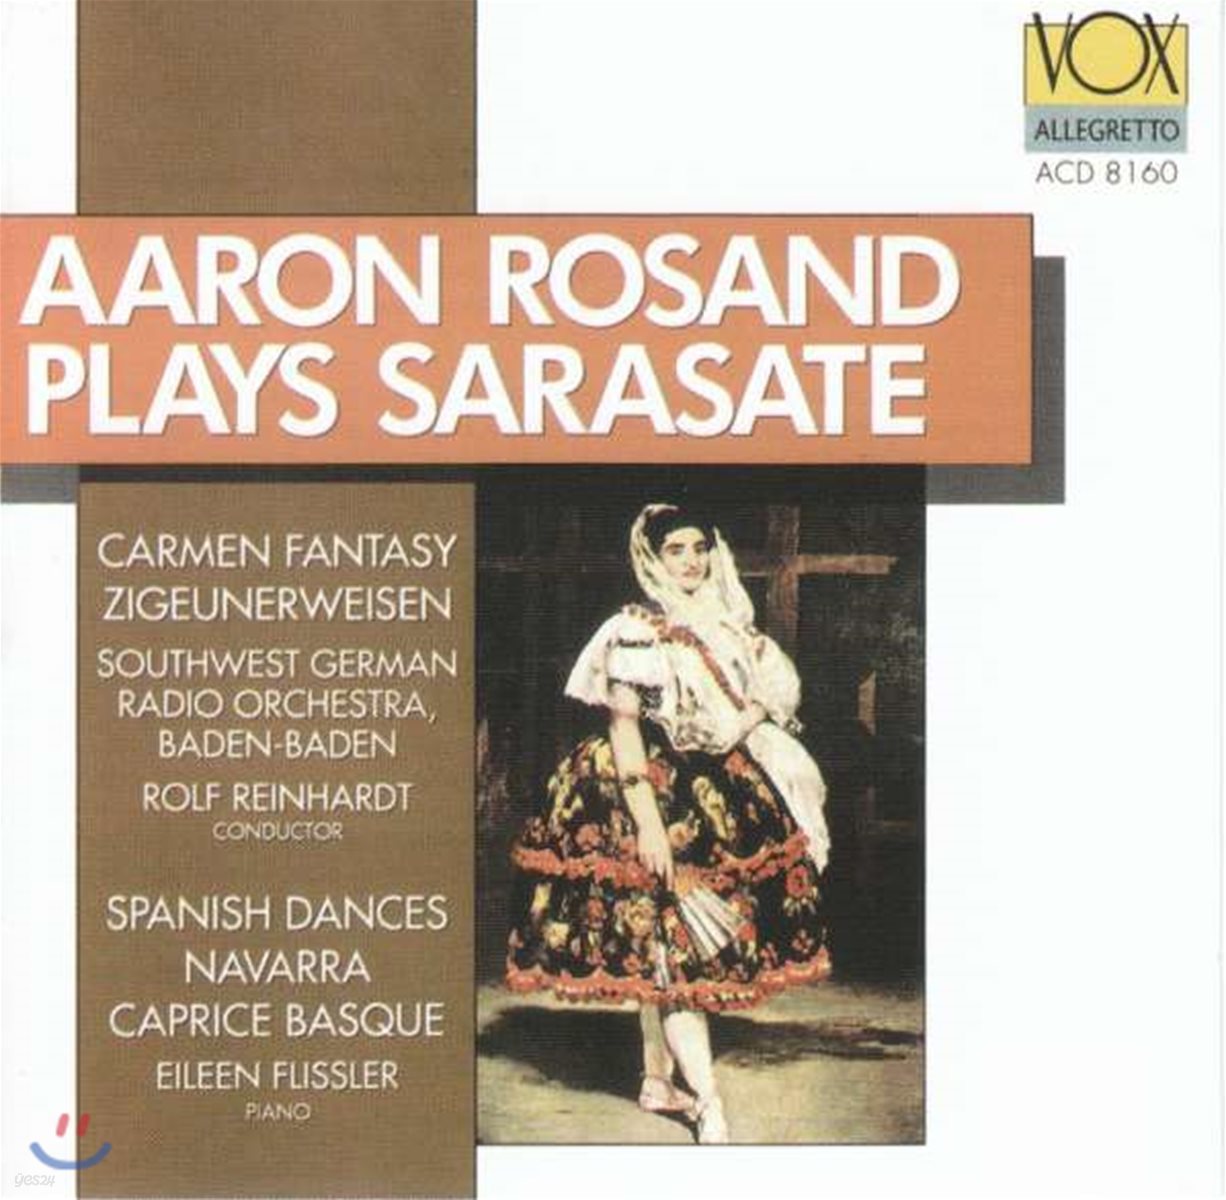 Aaron Rosand 사라사테: 카르멘 환상곡, 치고이네르바이젠 - 아론 로잔드 (Sarasate: Carmen Fantasy, Zigeunerweisen)